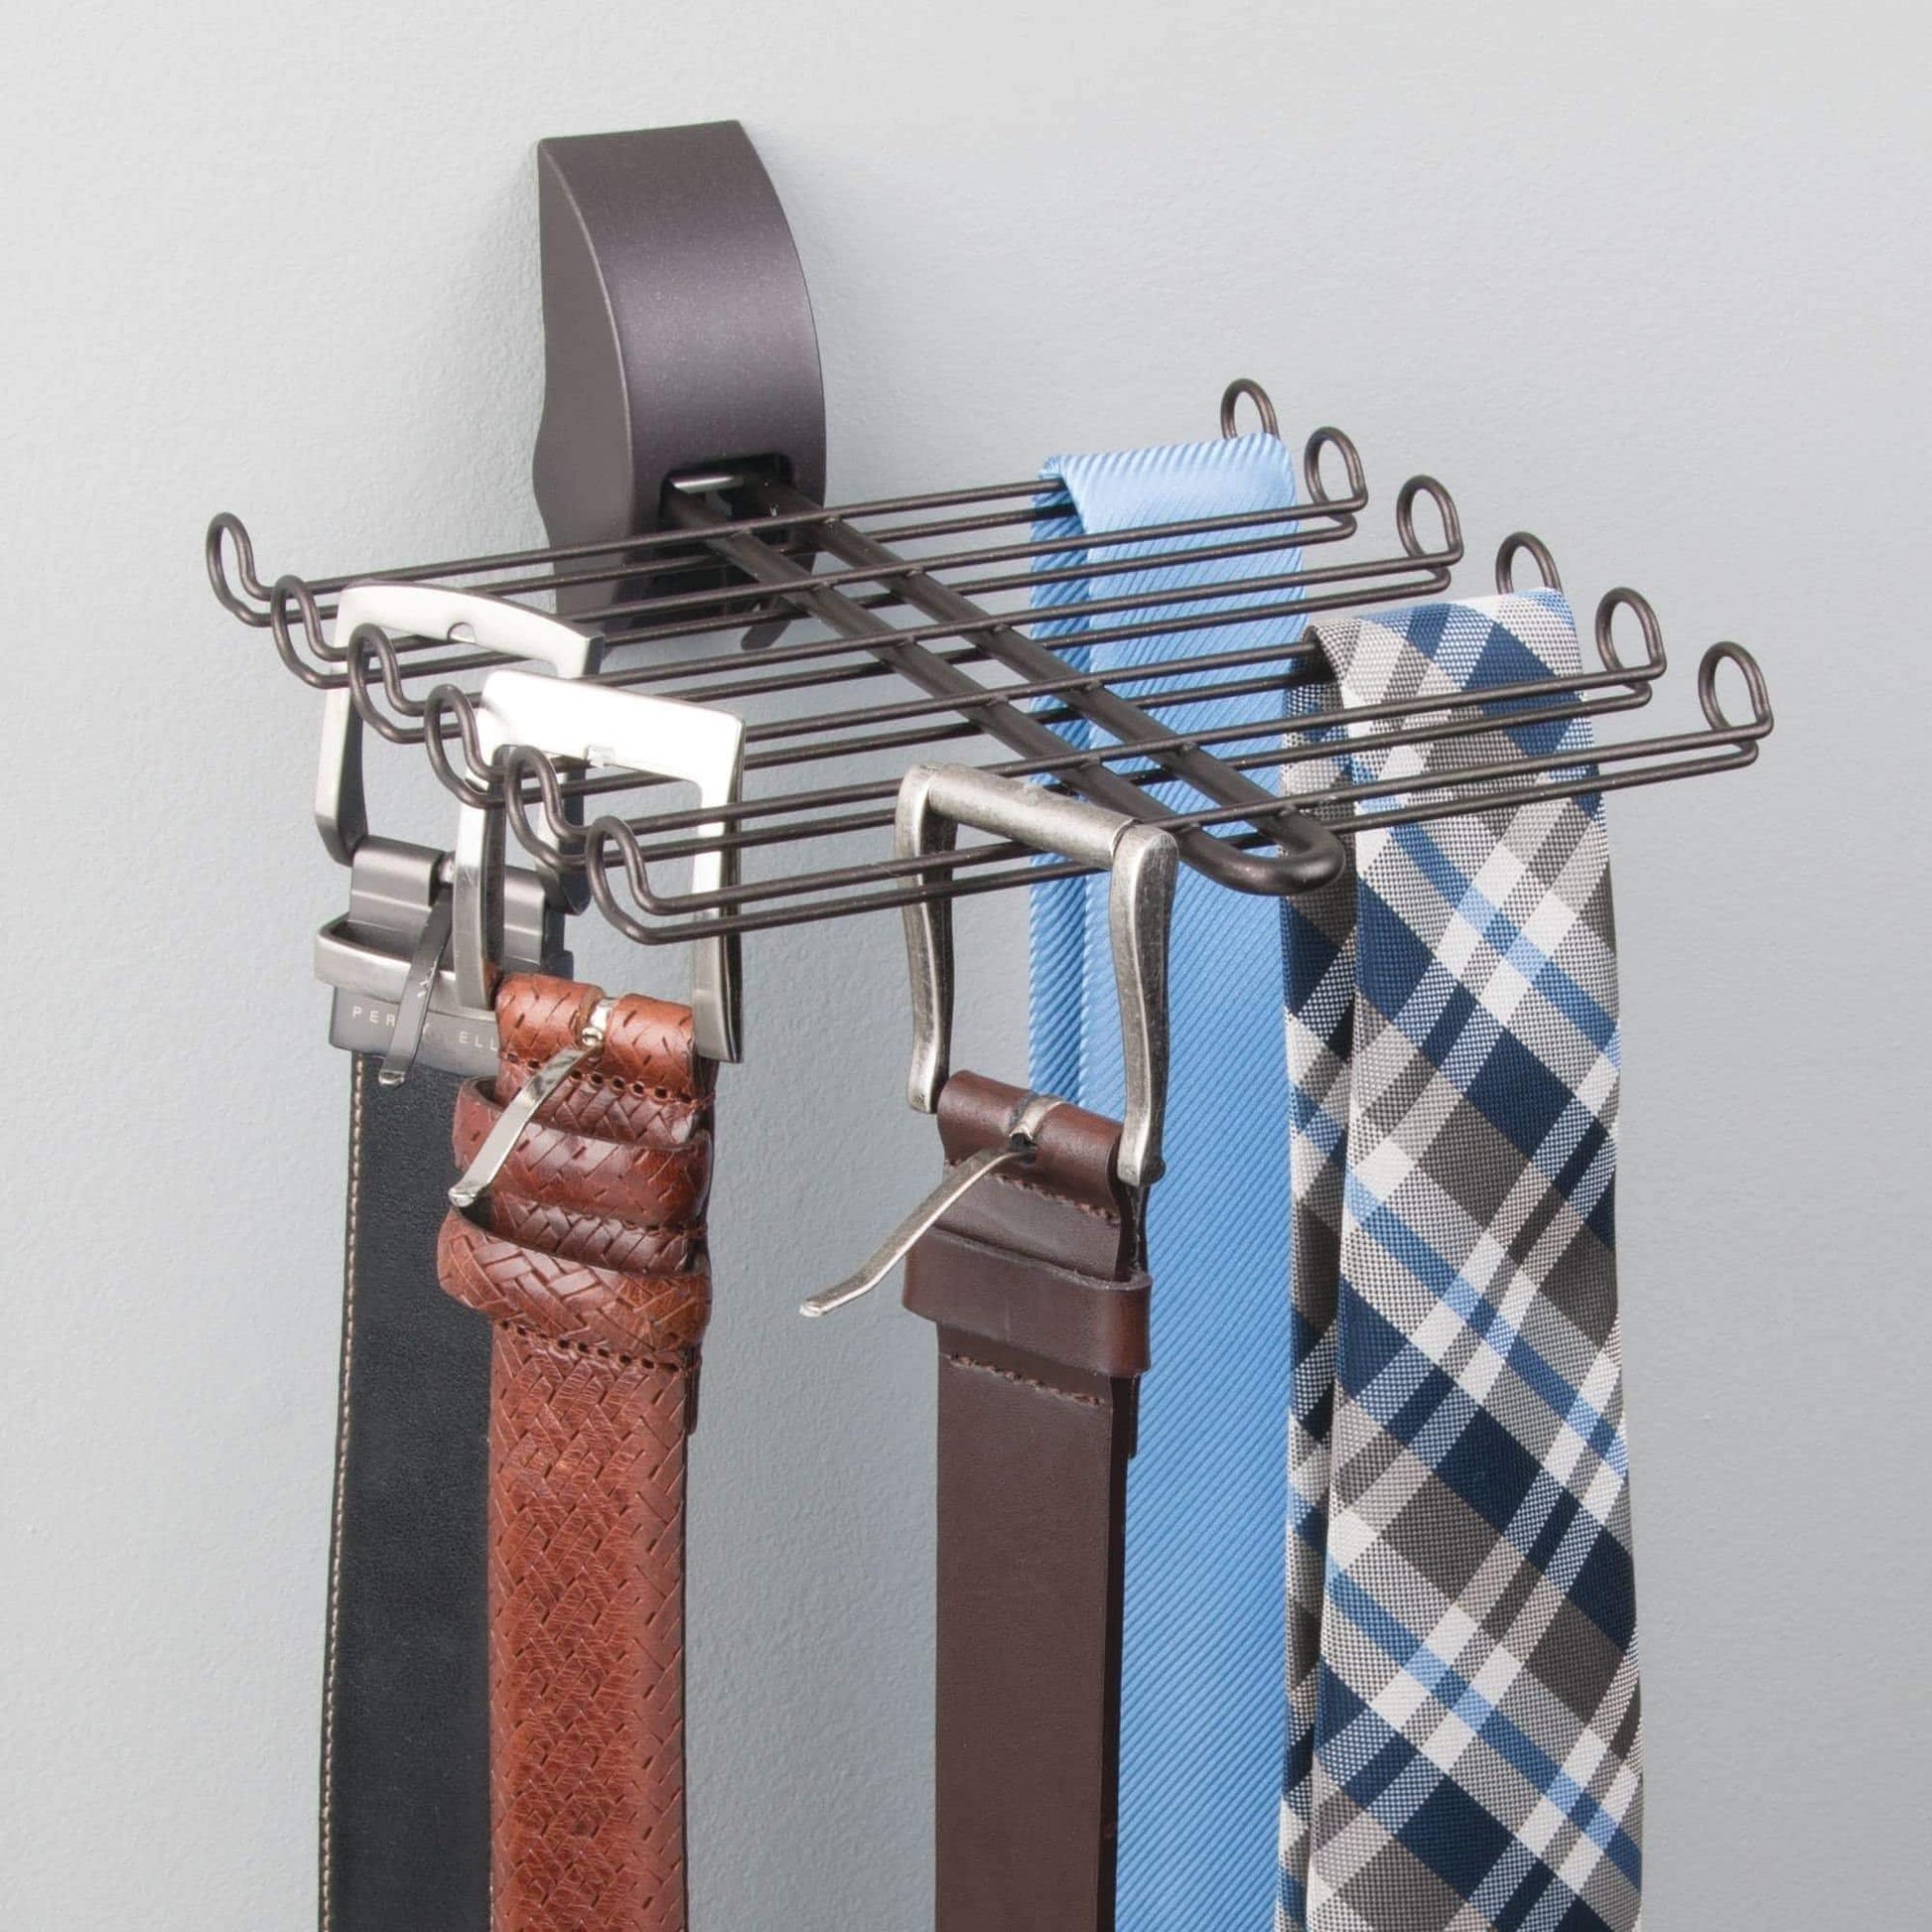 Save mdesign wall mount tie and belt rack organizer for closet storage bronze